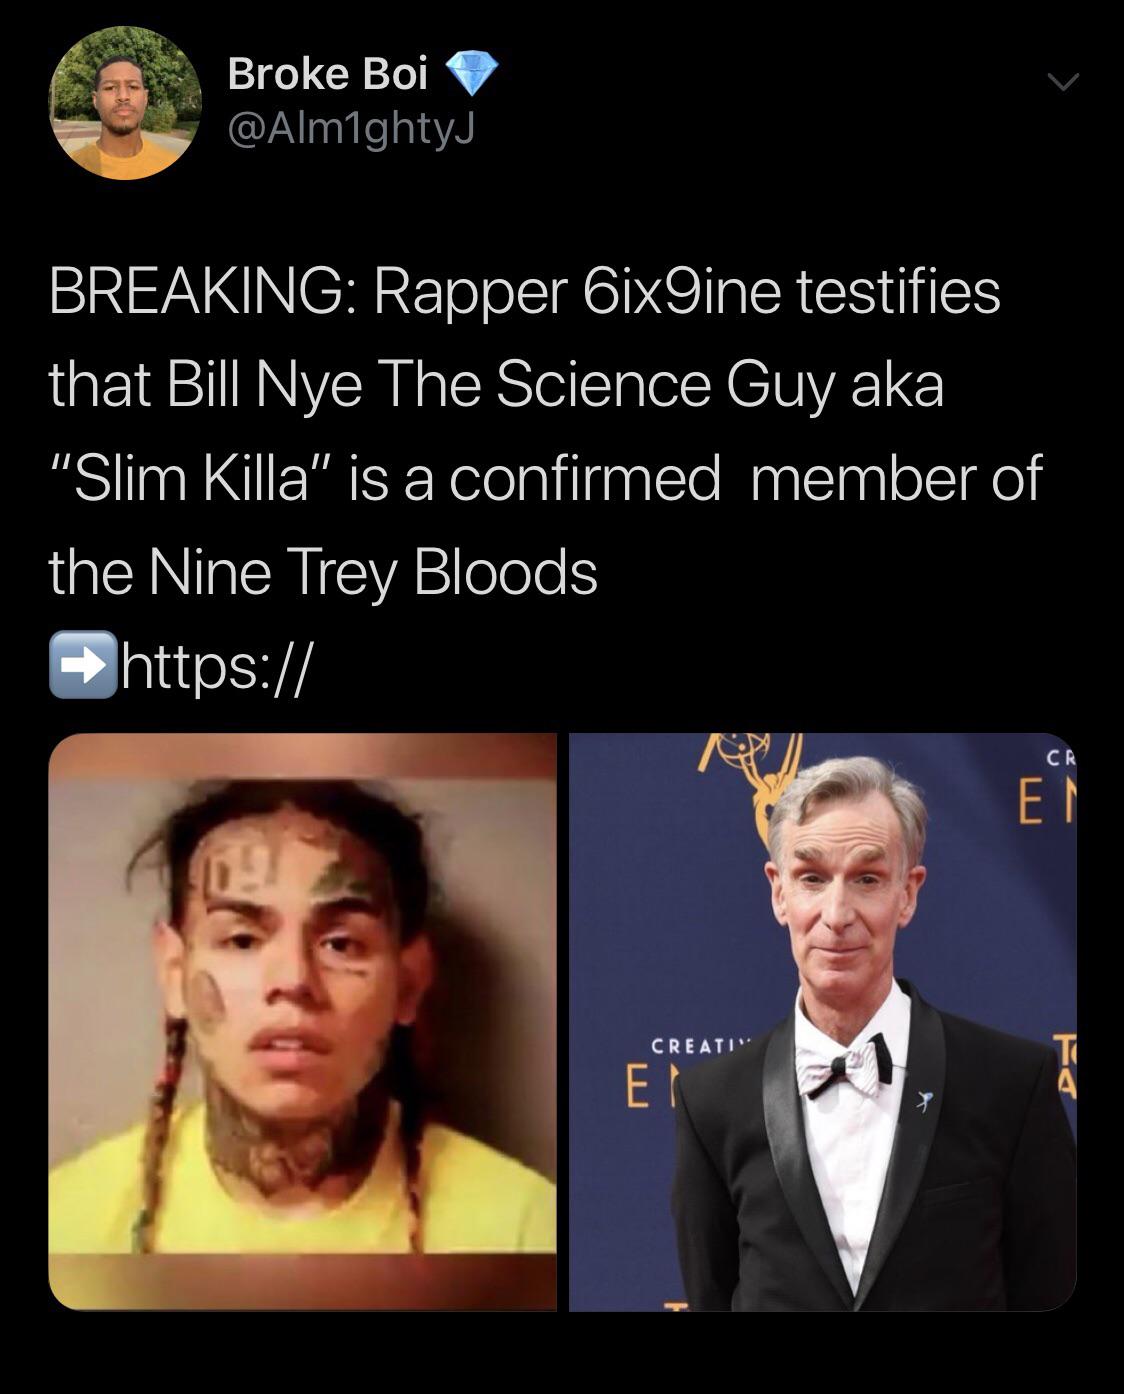 black twitter - Broke Boi Breaking Rapper 6ix9ine testifies that Bill Nye The Science Guy aka